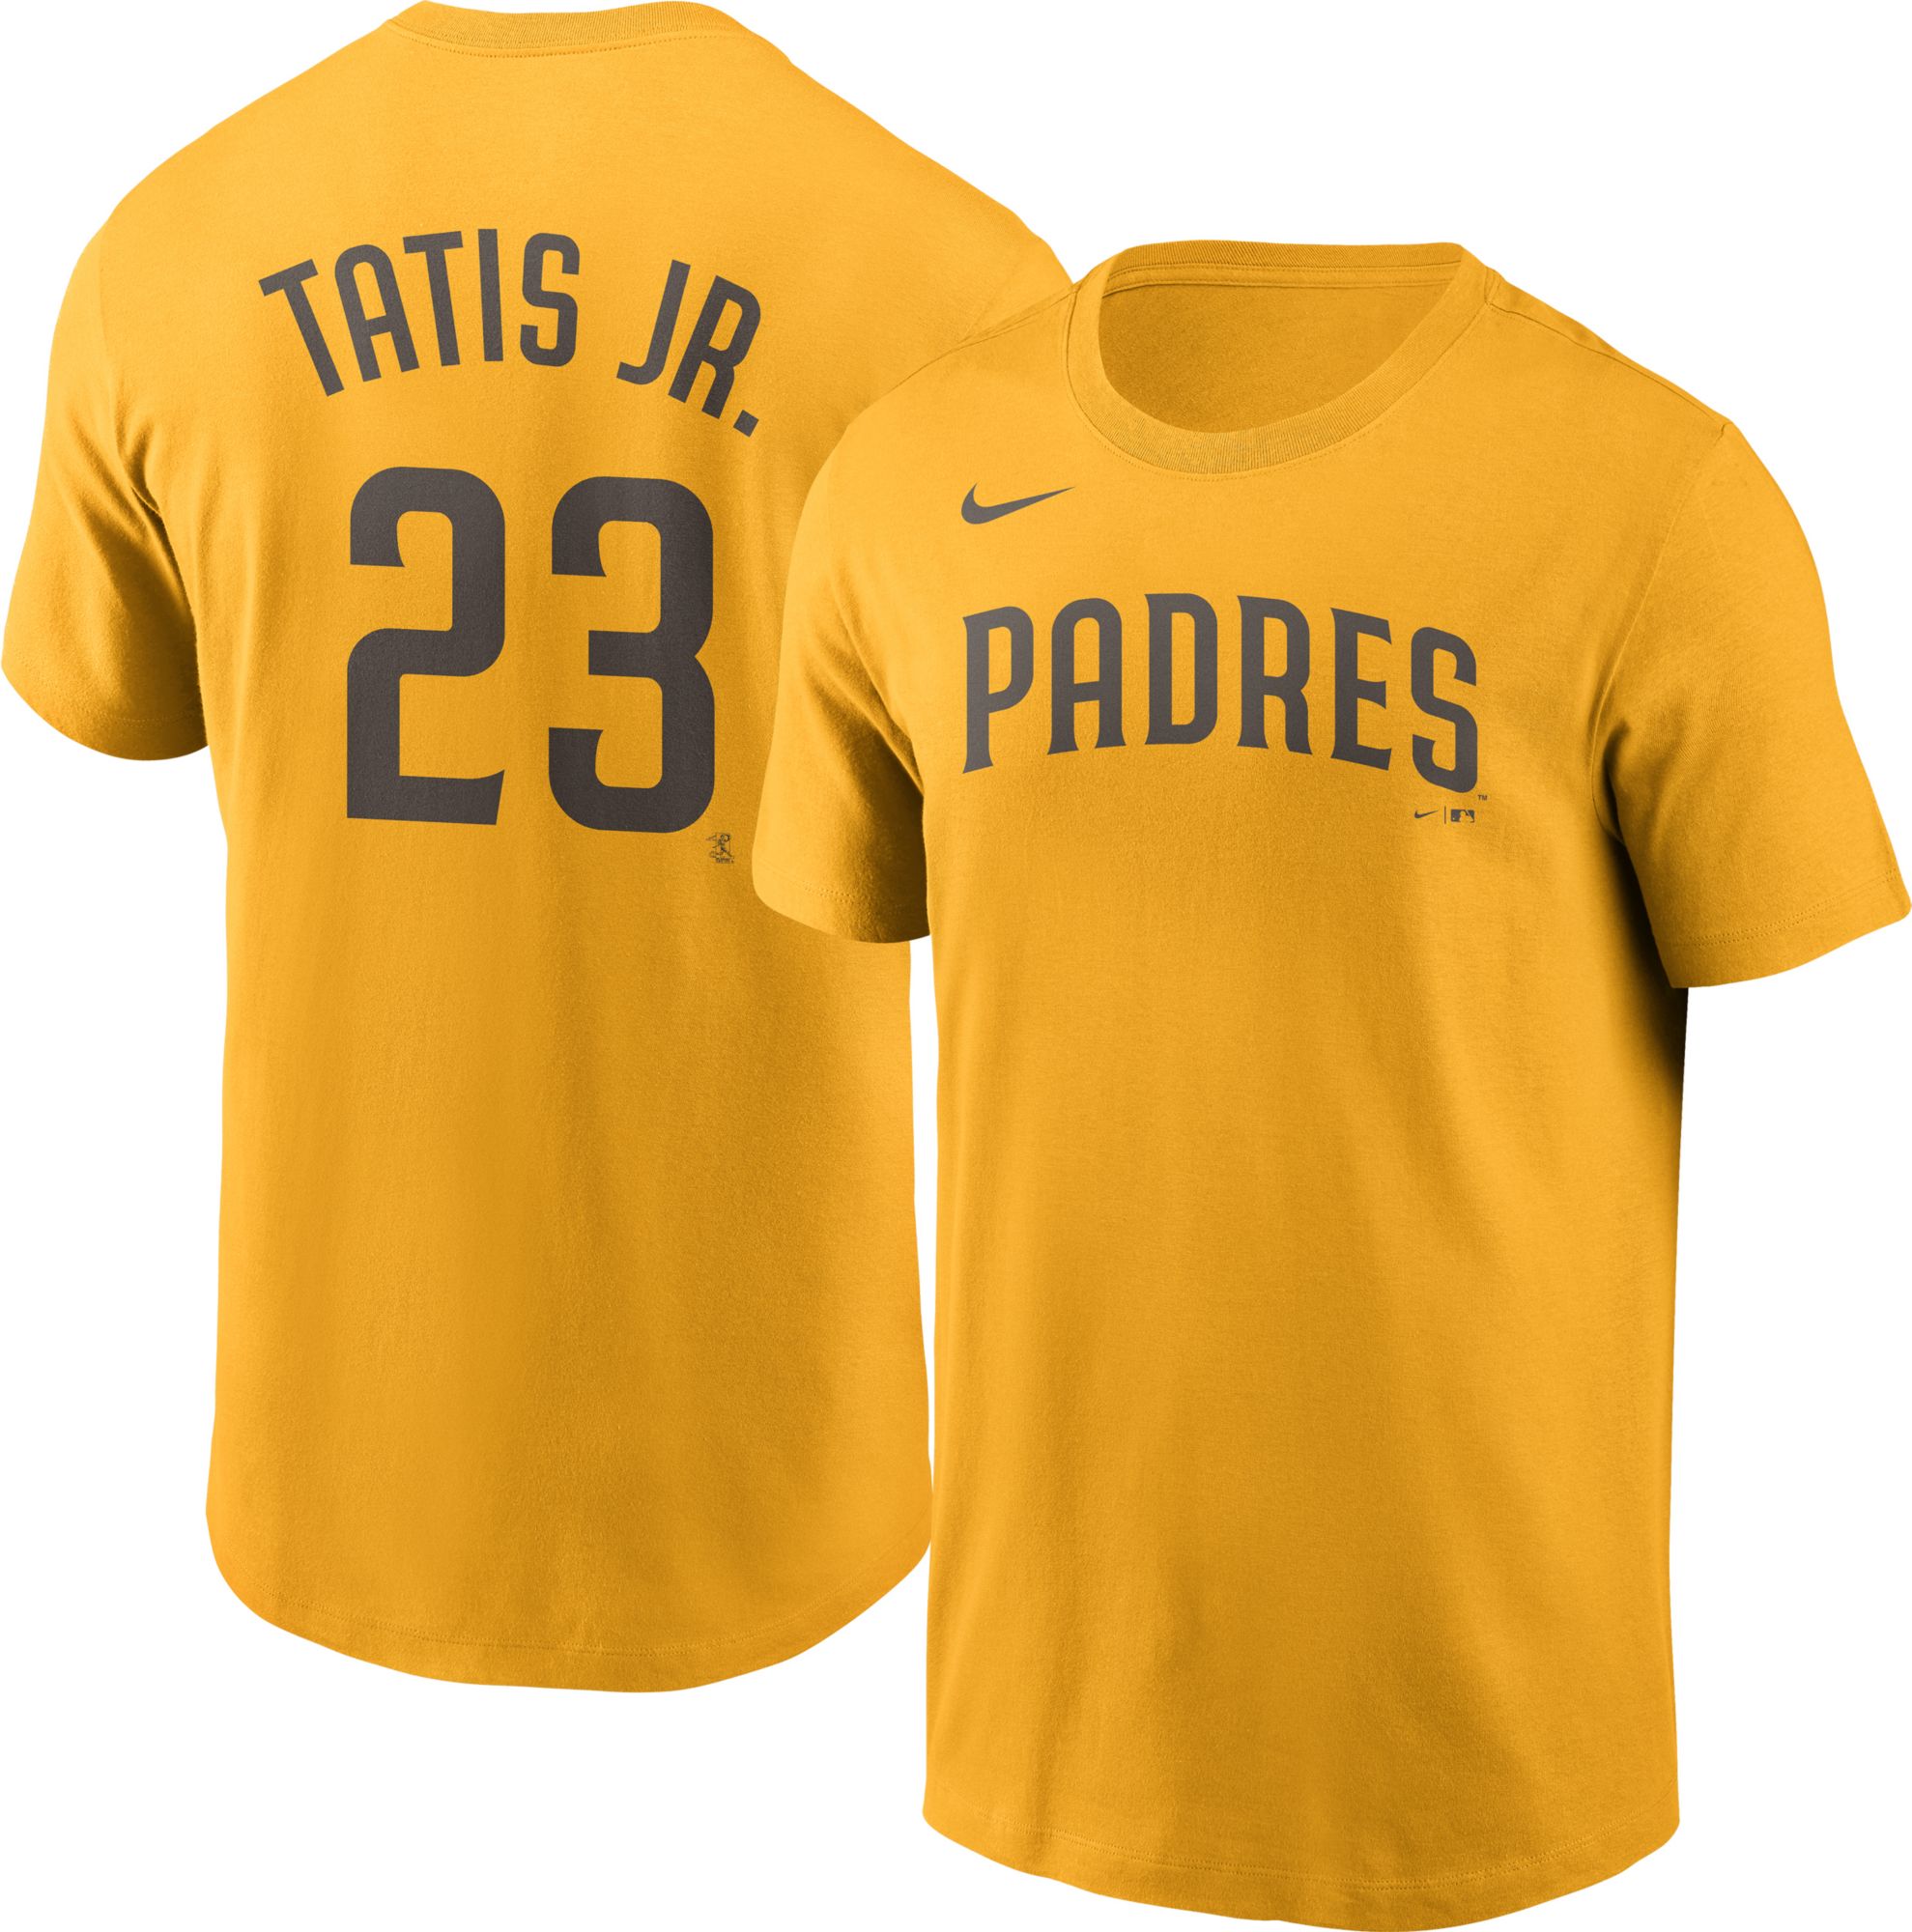 Fernando Tatís Jr. San Diego Padres Nike Home Authentic Player Jersey -  White/Brown